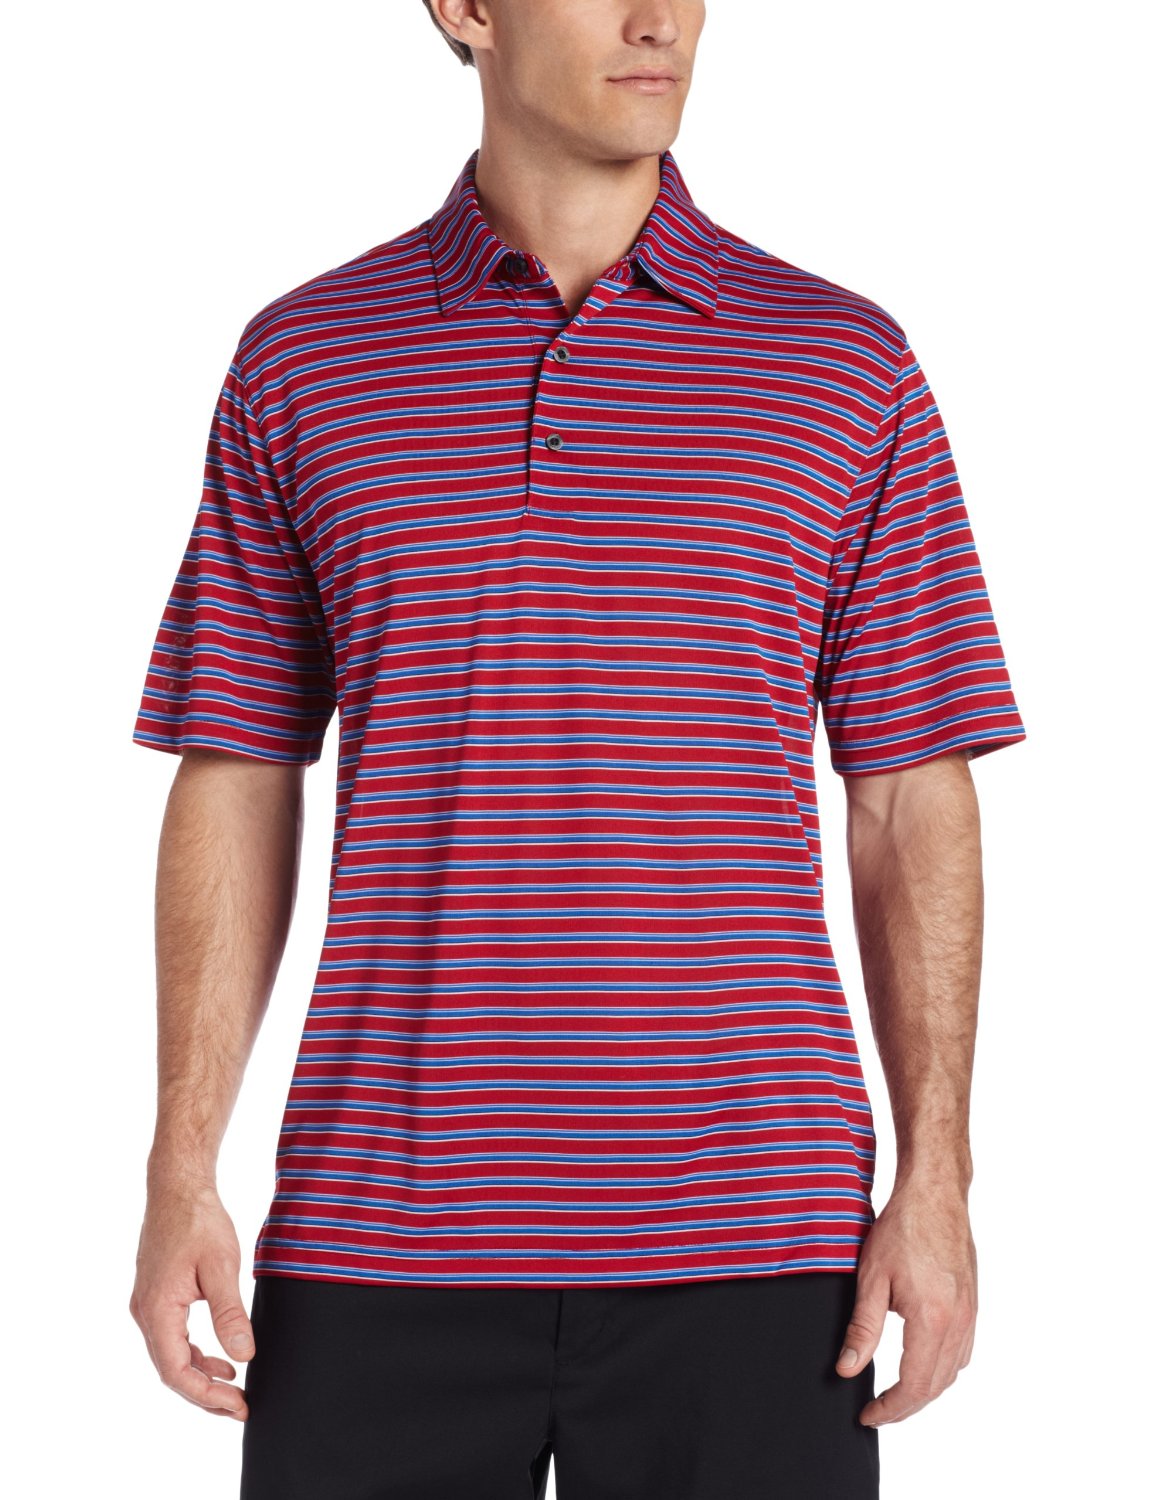 Greg Norman Sorbtek Multi Stripe Golf Polo Shirts